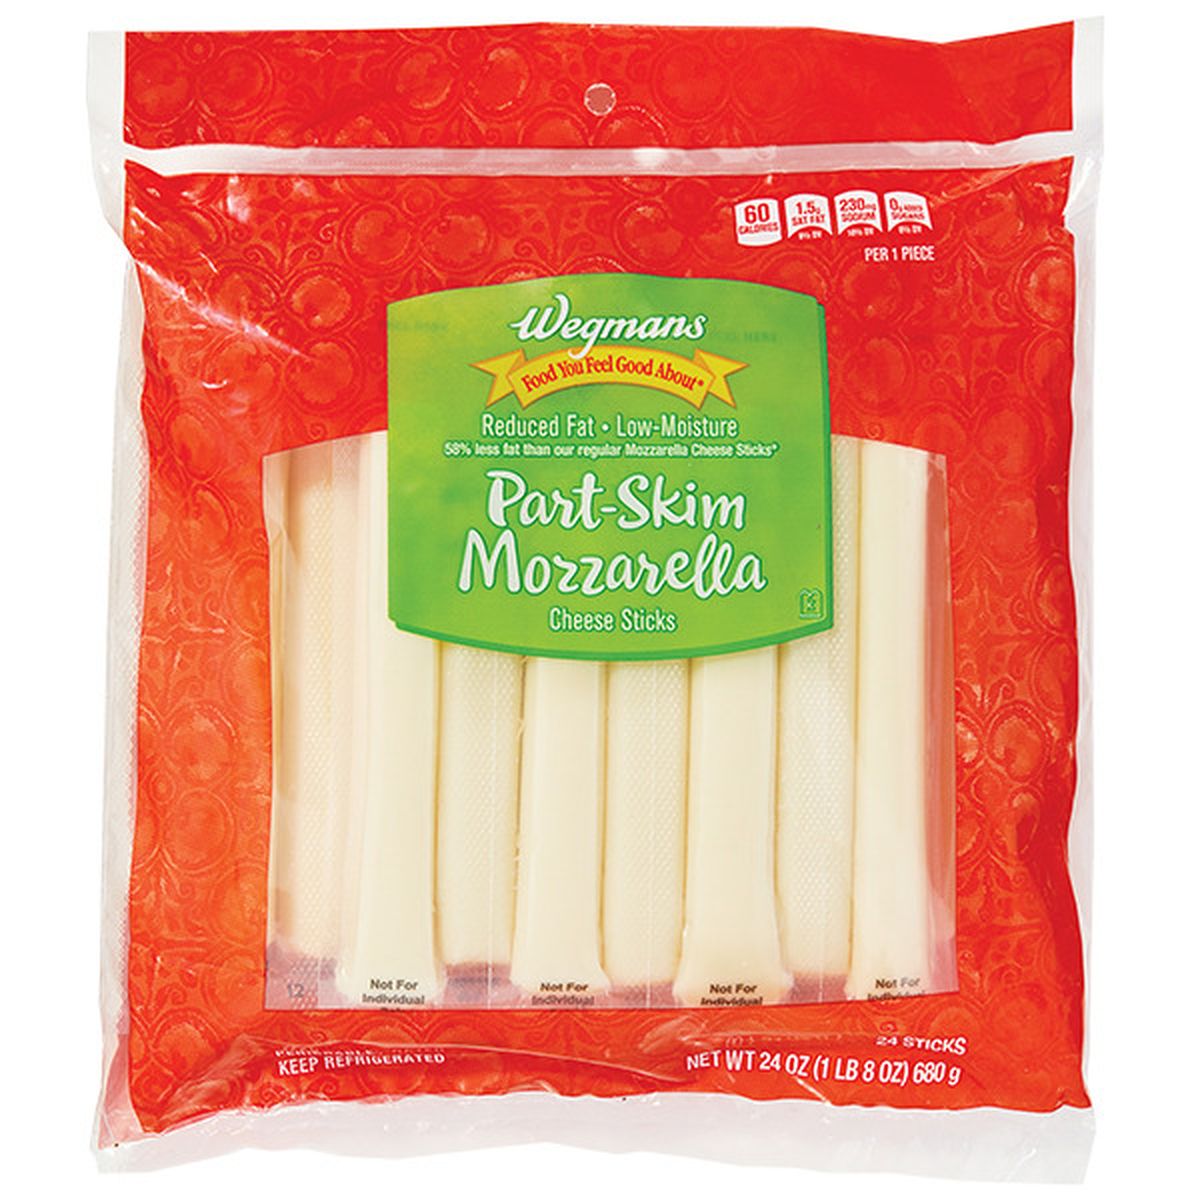 Calories in Wegmans Reduced Fat Part-Skim Mozzarella Cheese Sticks, 24 Count